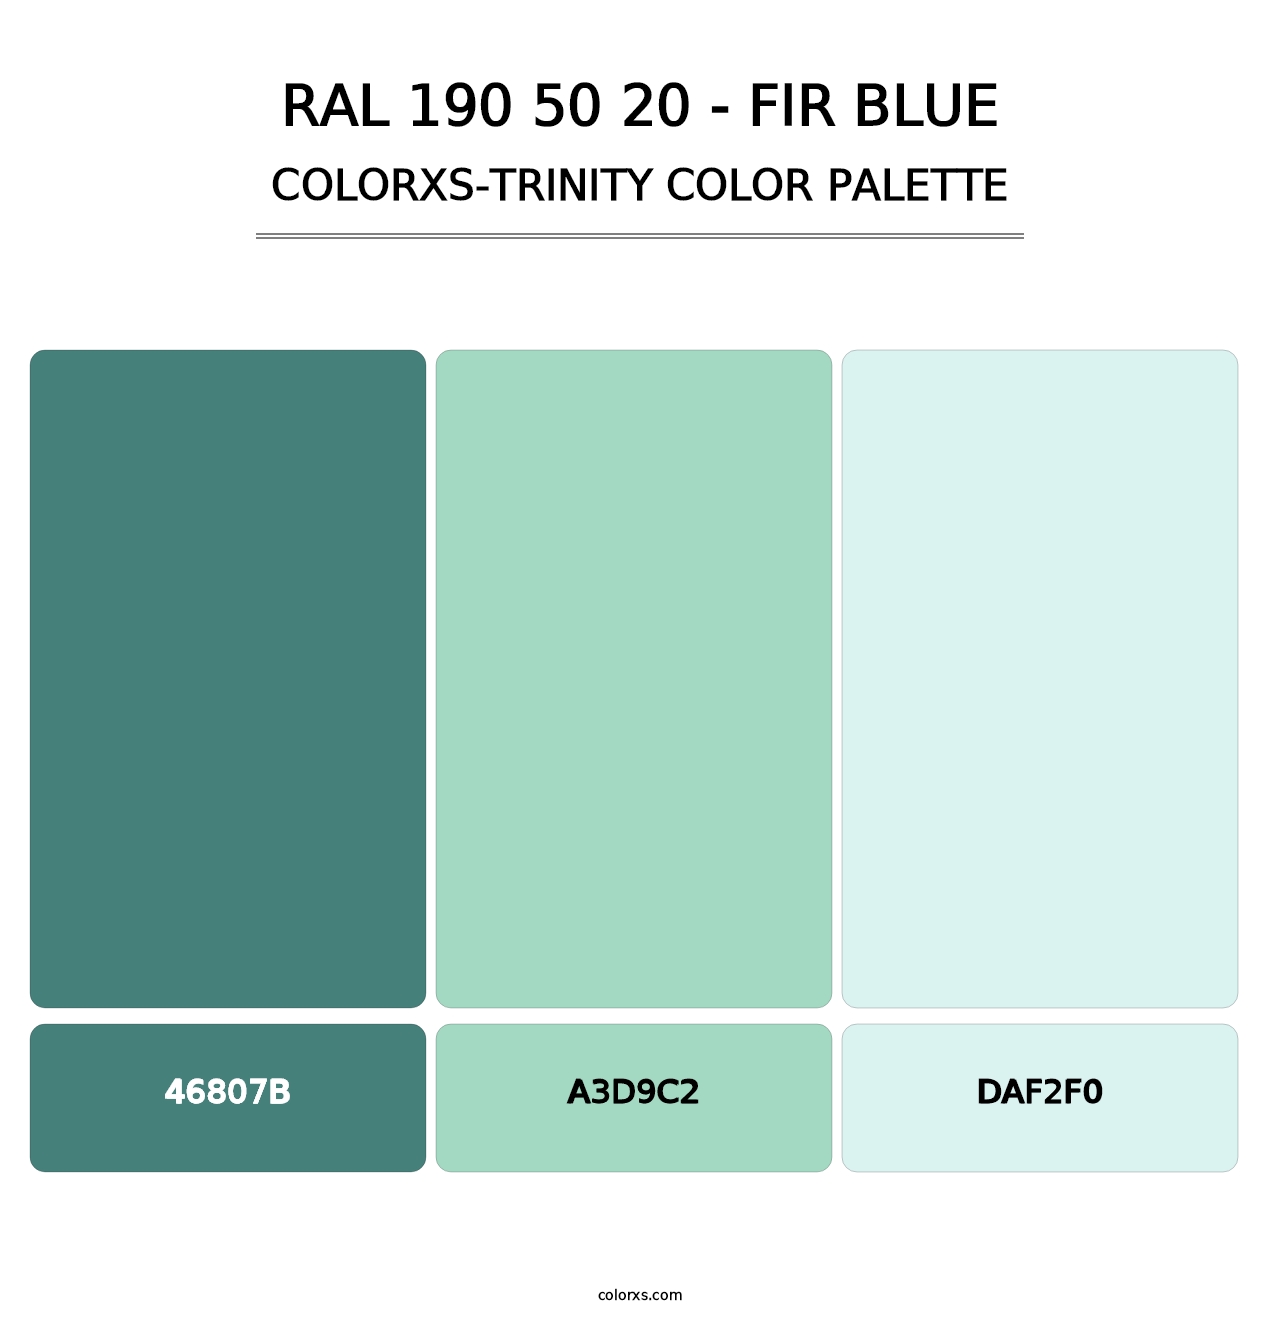 RAL 190 50 20 - Fir Blue - Colorxs Trinity Palette